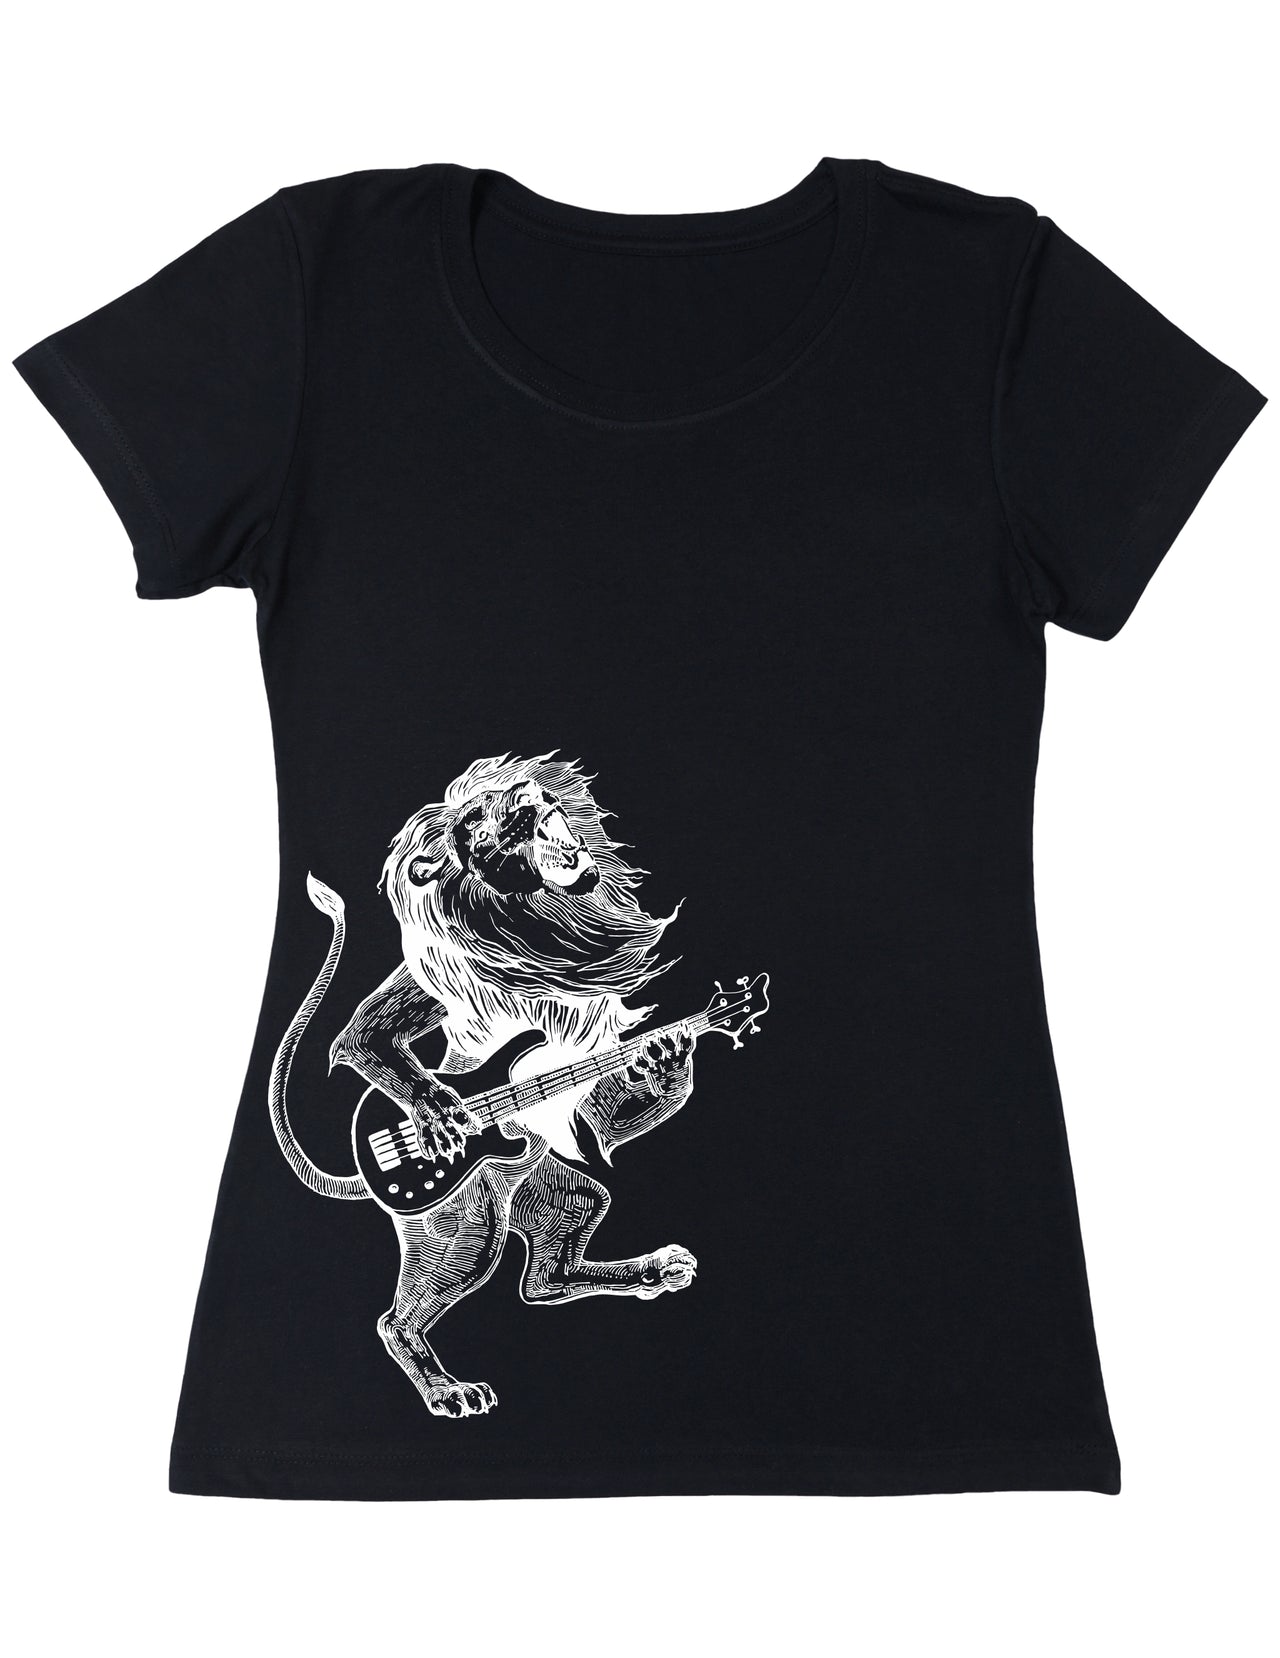 SEEMBO Lion Playing Guitar Women's Poly-Cotton T-Shirt Side Print